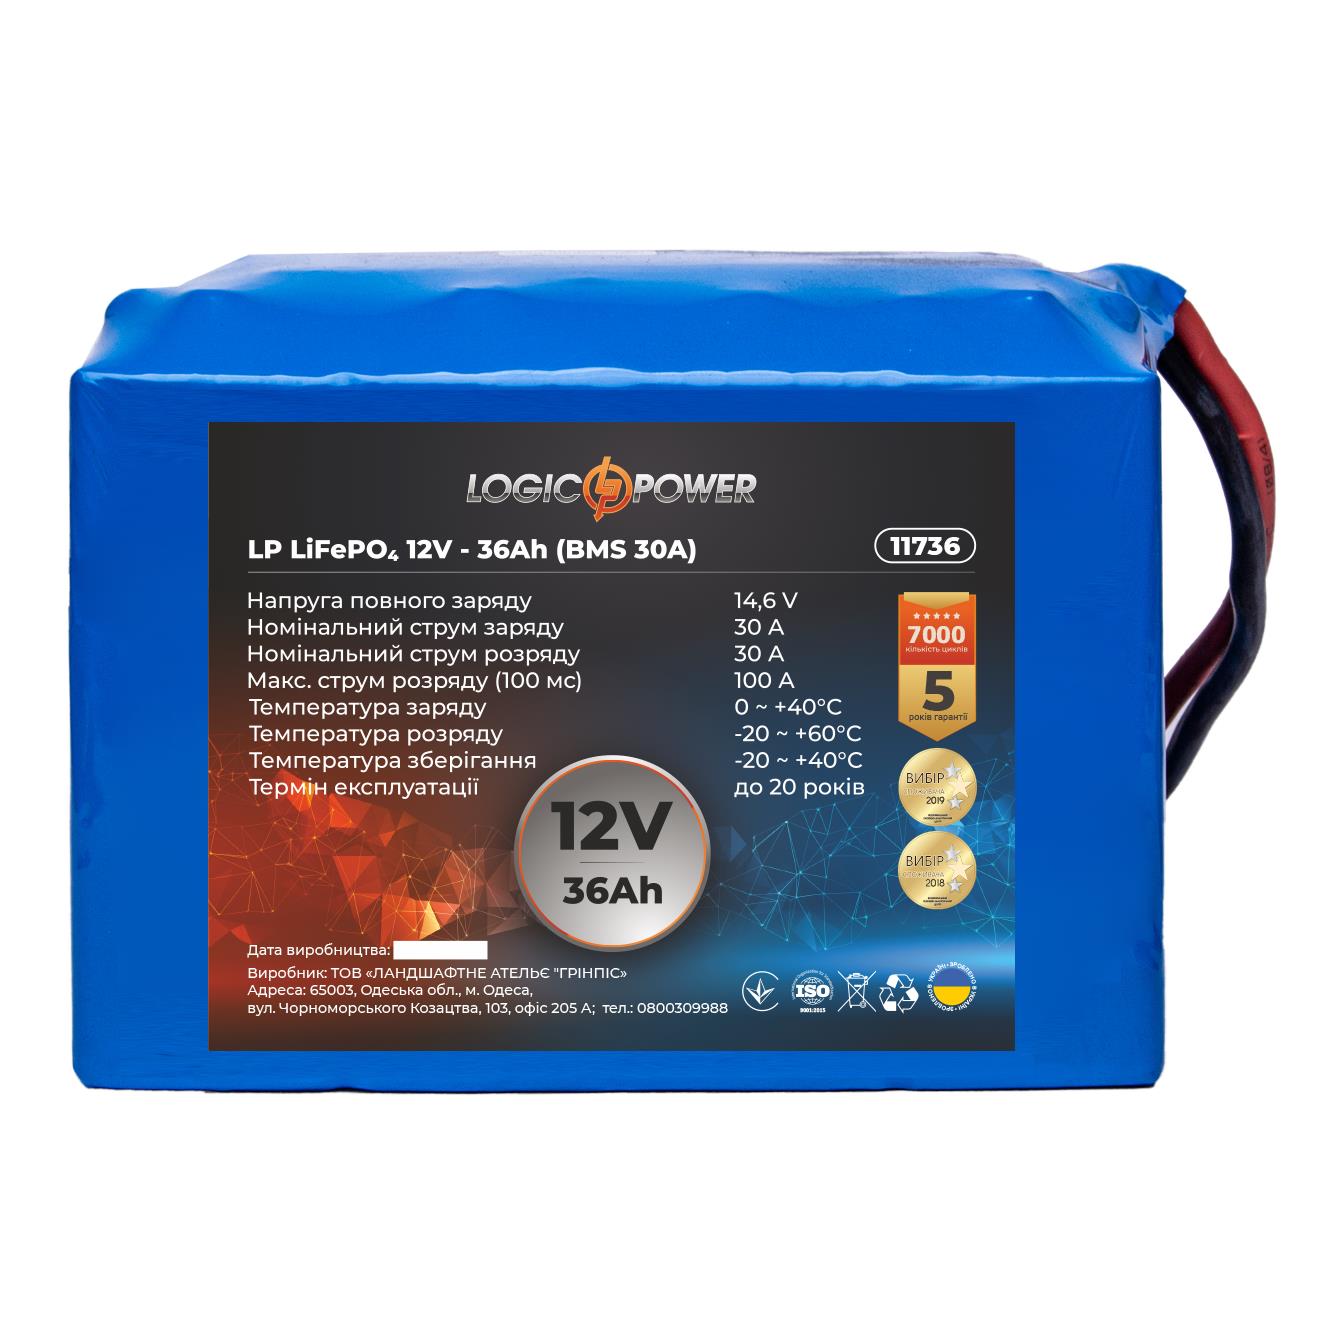 Цена аккумулятор литий-железо-фосфатный LogicPower LP LiFePO4 12V - 36 Ah (BMS 30A) (11736) в Полтаве